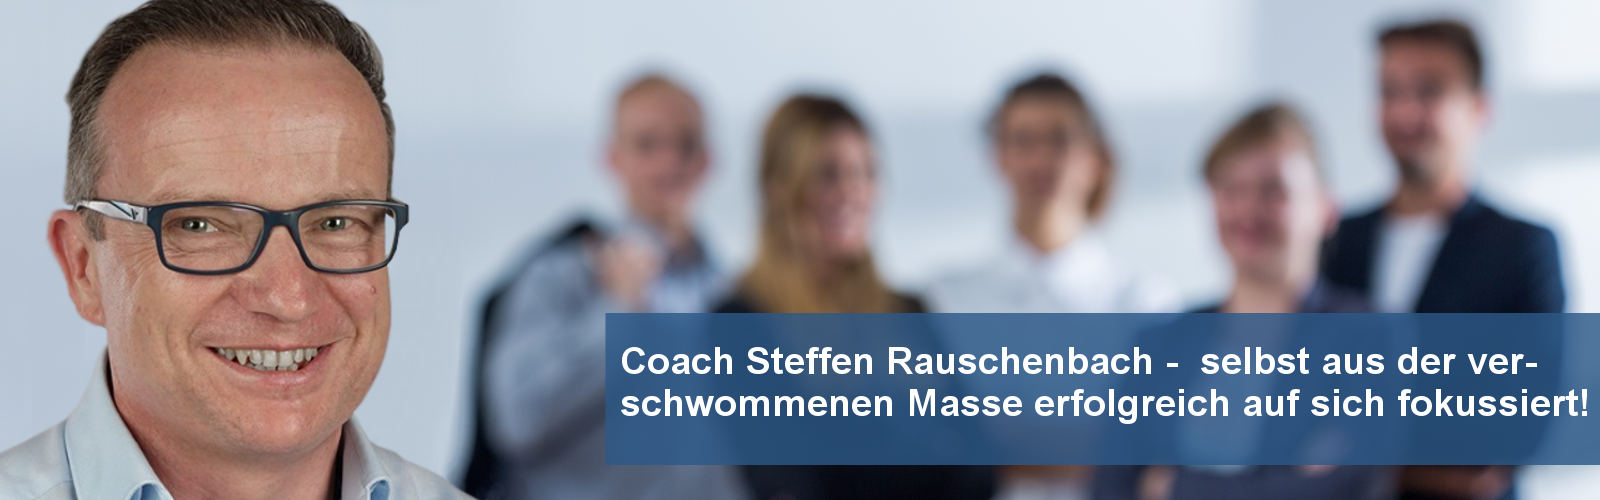 Coach Steffen Rauschenbach